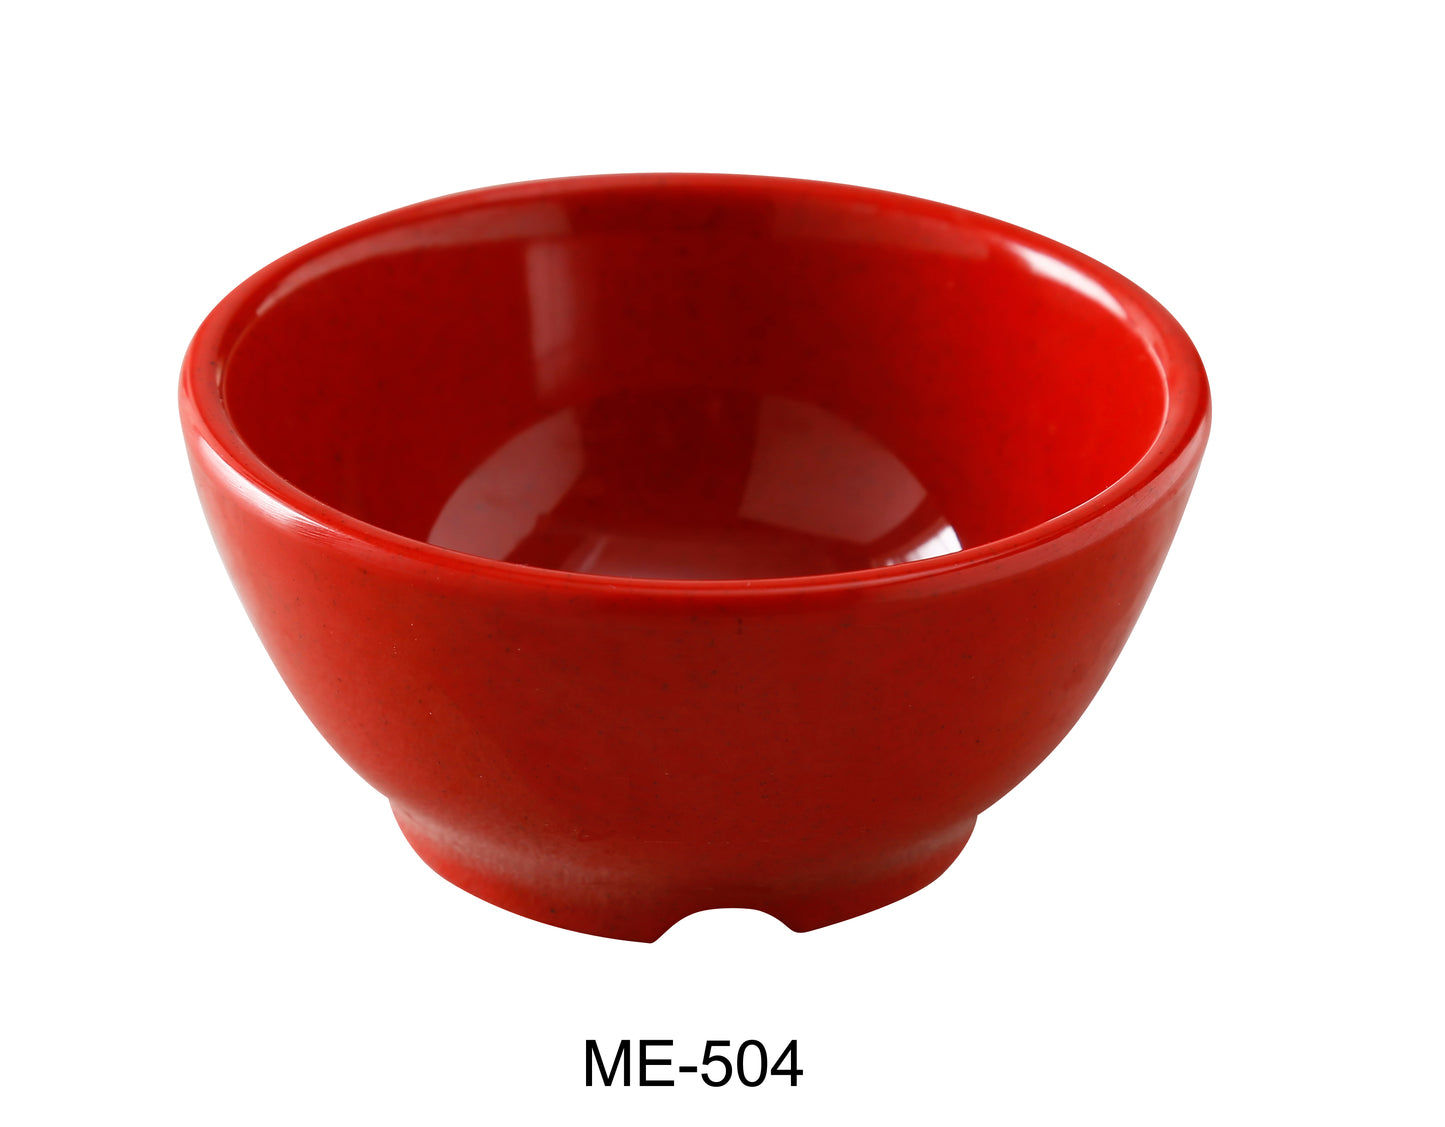 Yanco ME-504 Mexico Bowl